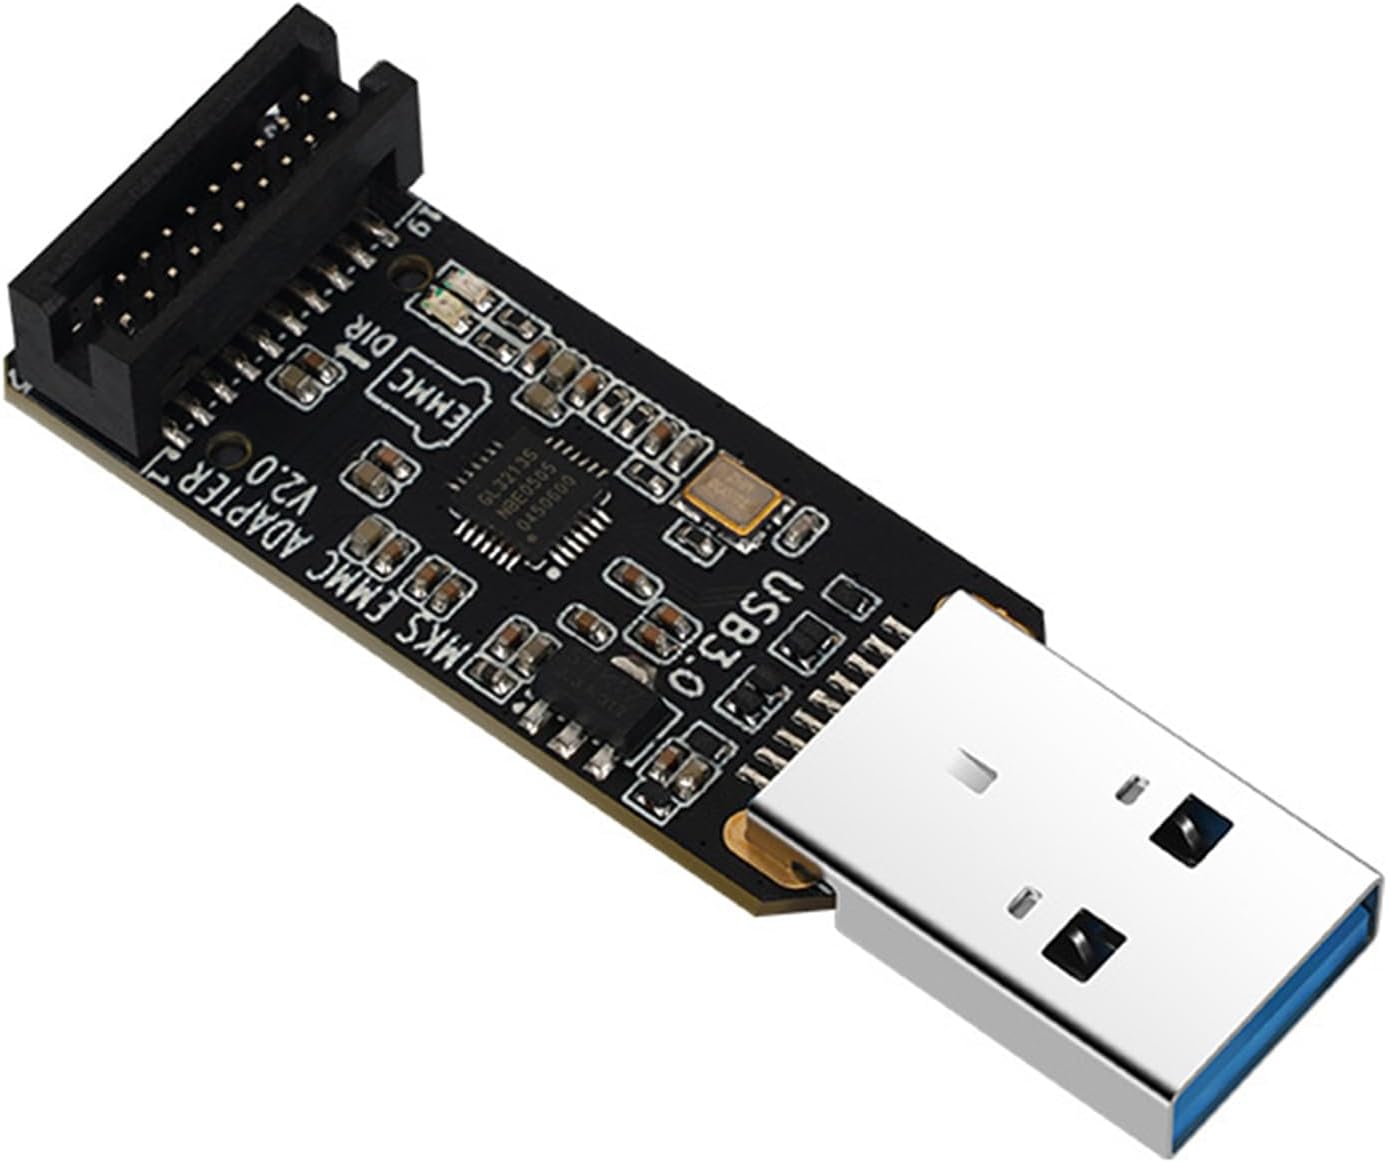 Makerbase MKS EMMC-ADAPTER V2 USB 3.0